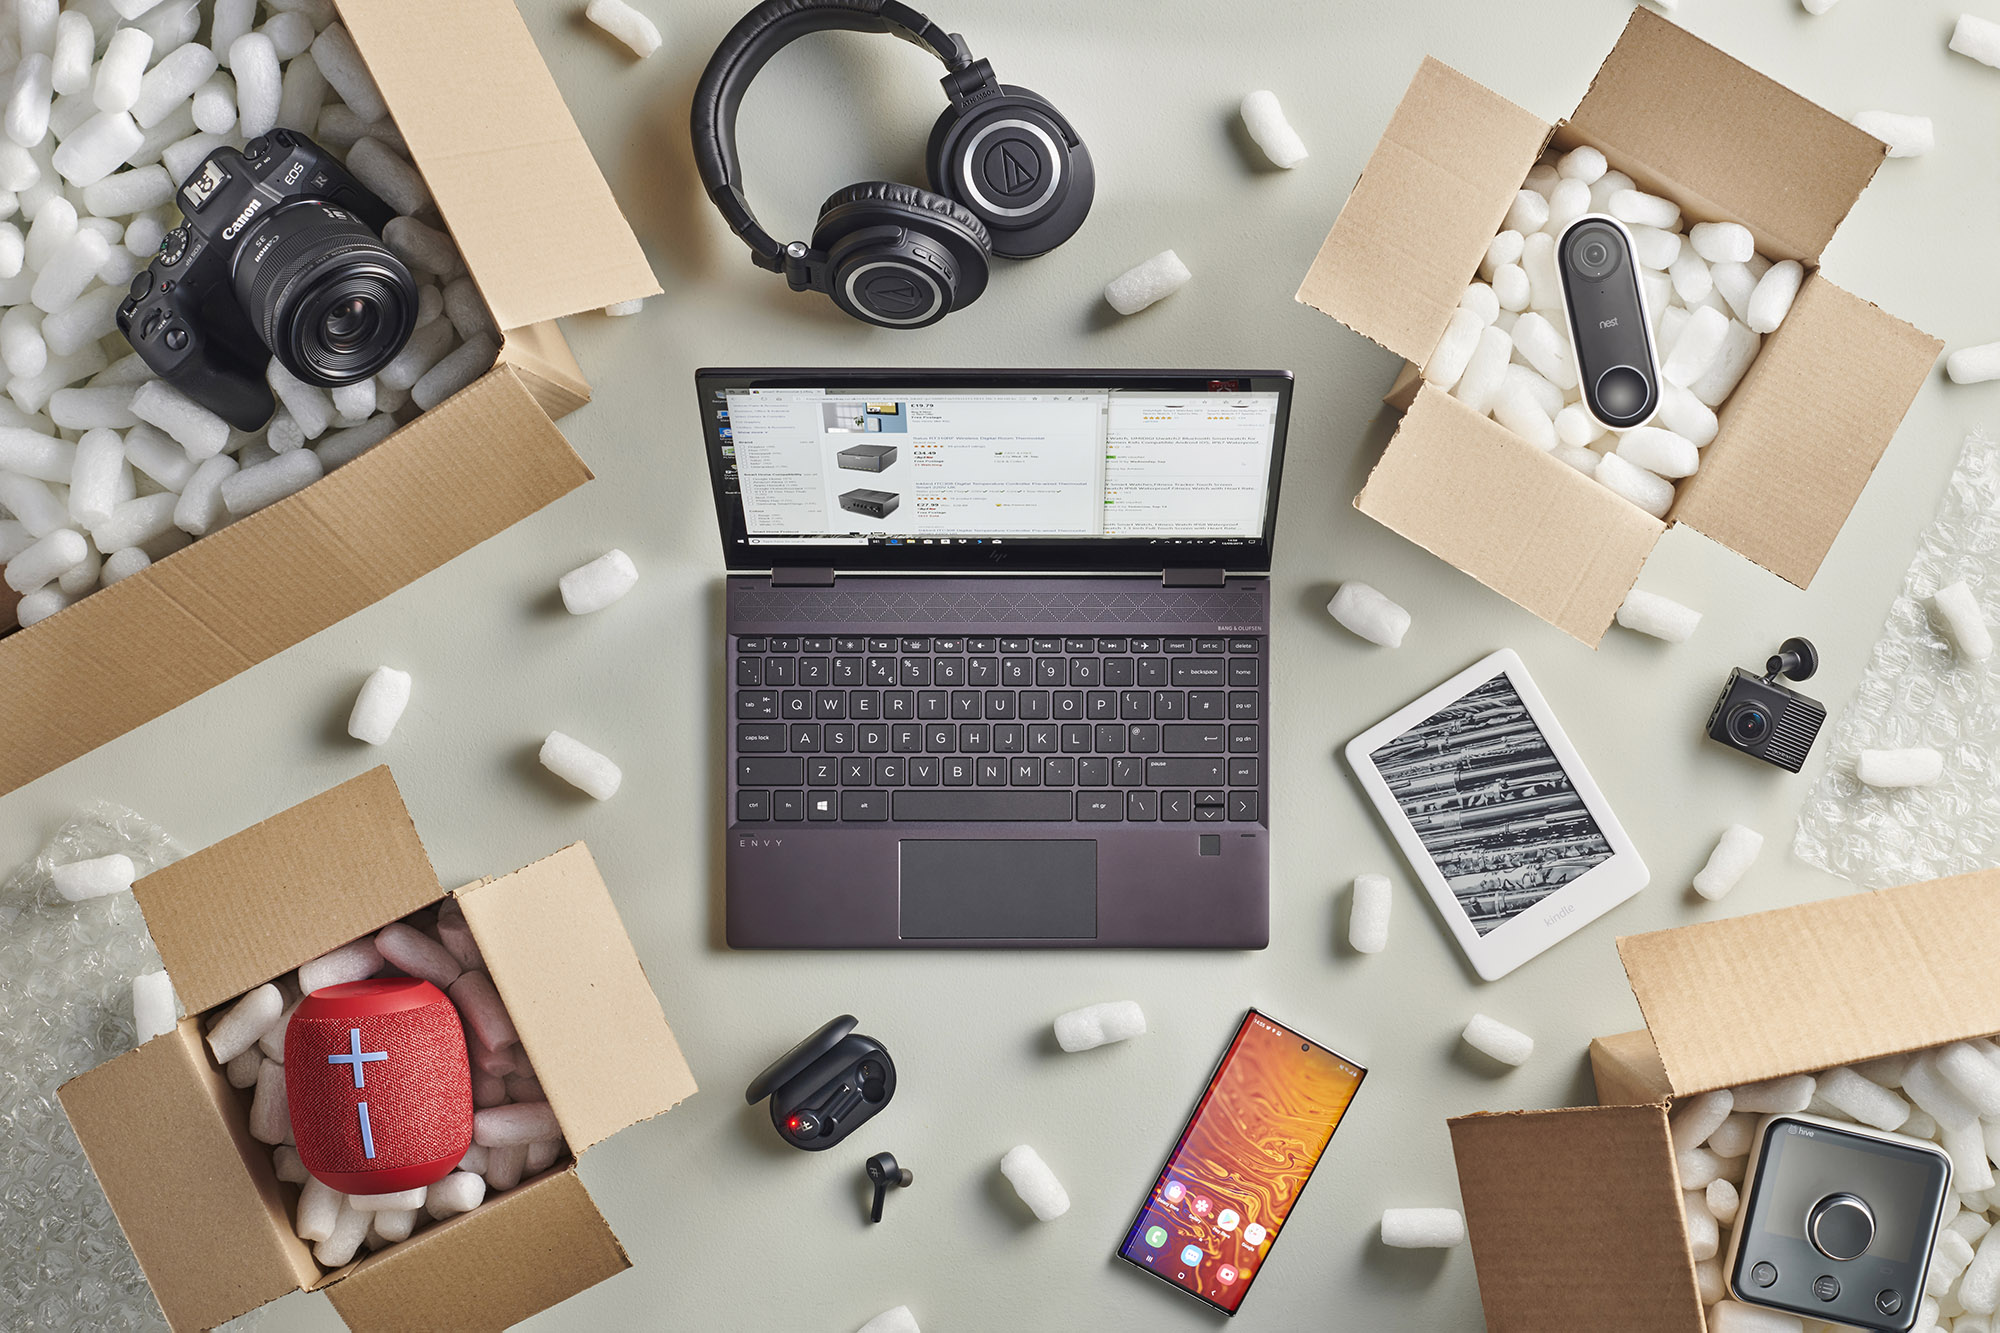 Best deals: Tech, laptops, TVs, and more sales